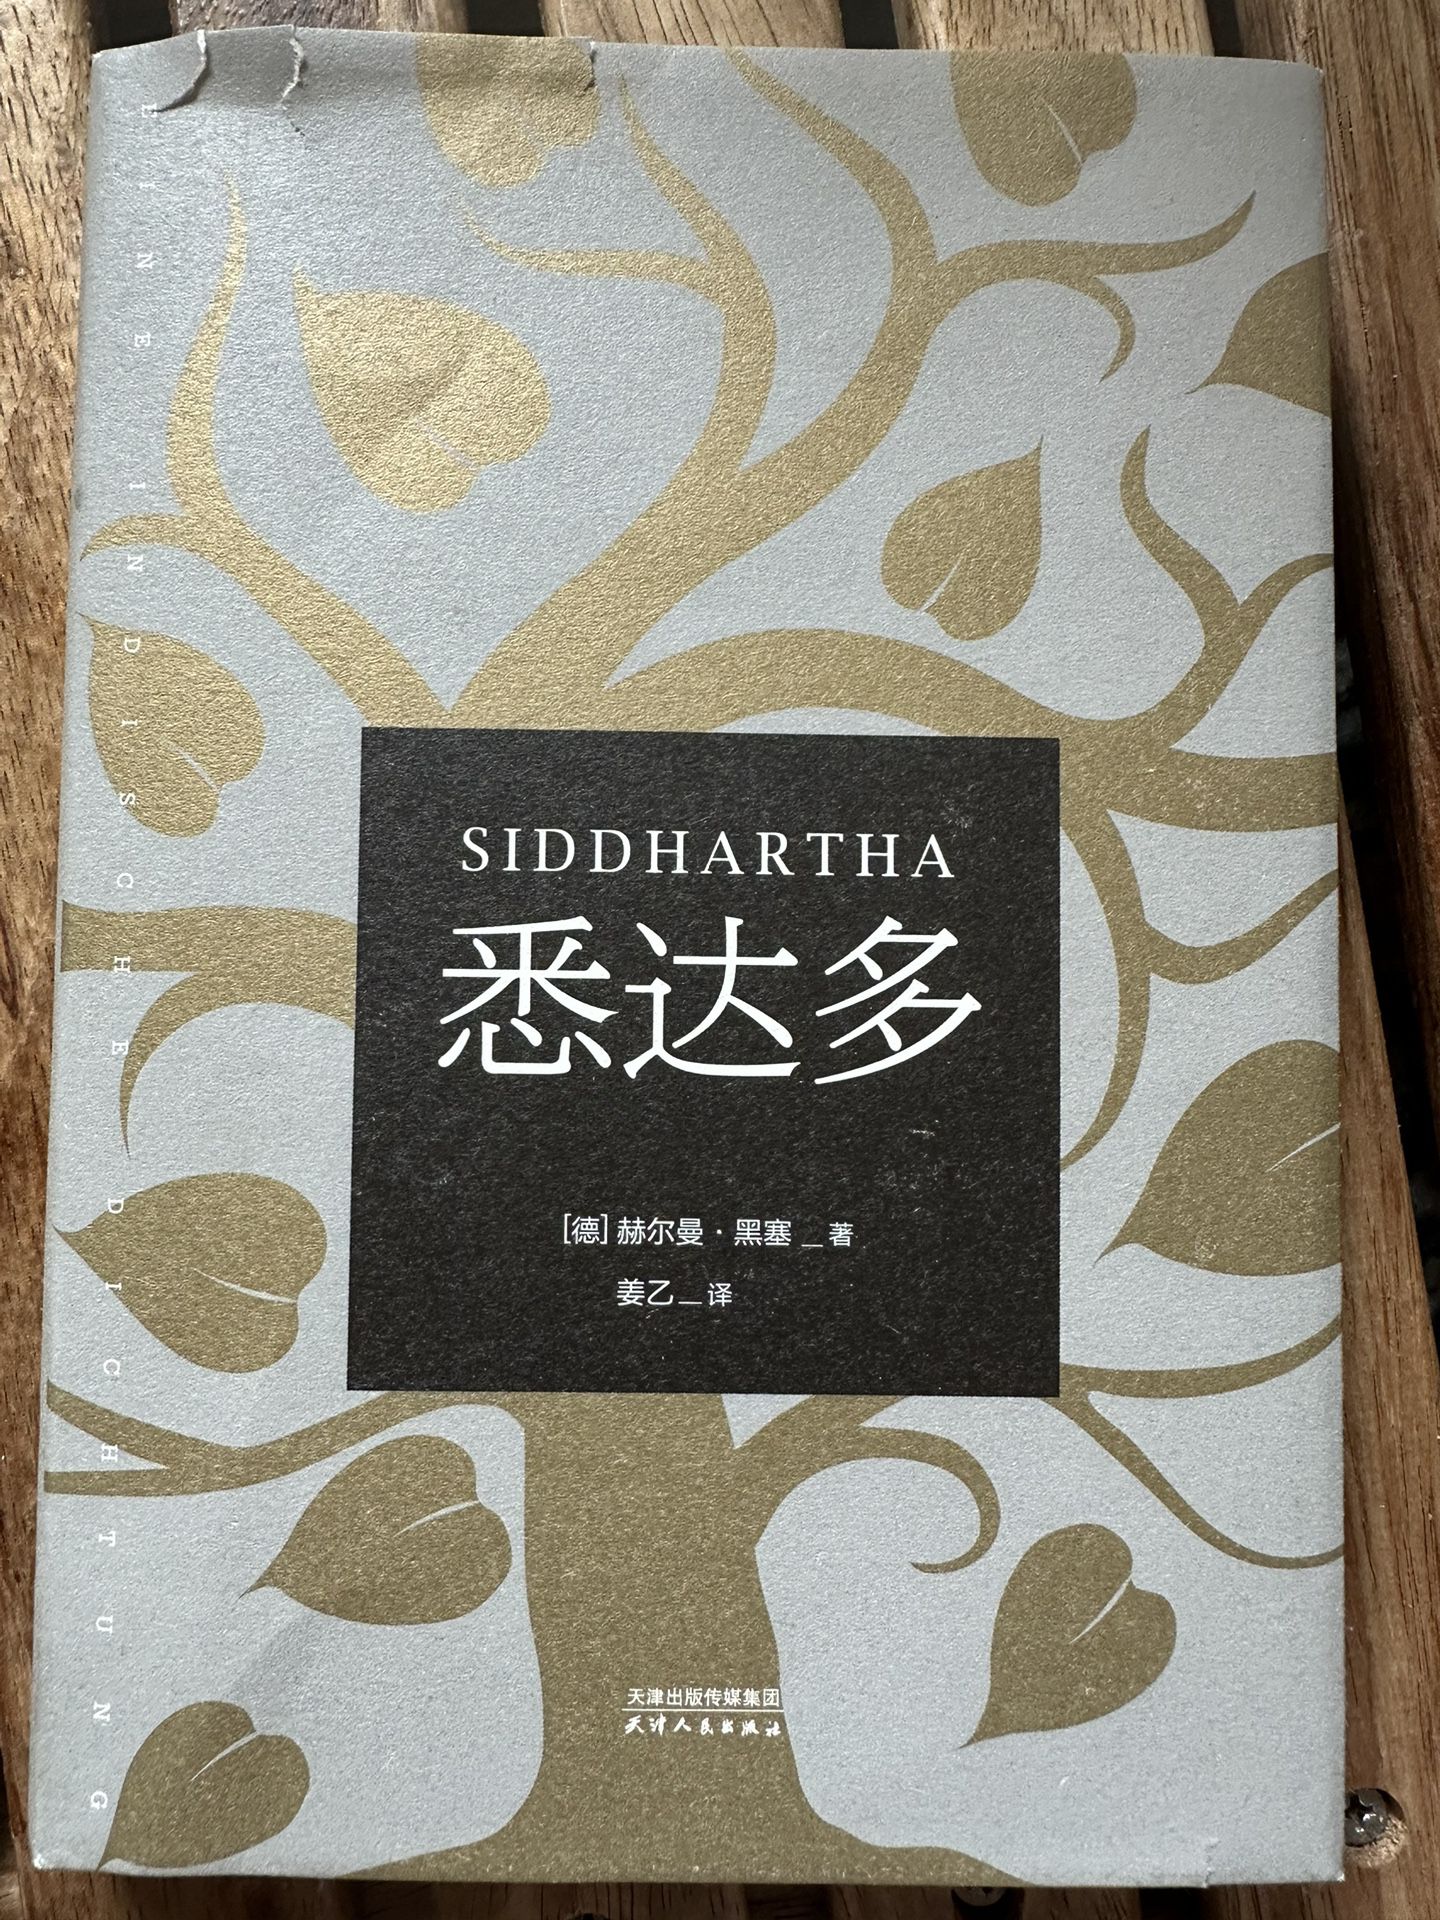 中文书 悉达多 【德】赫尔曼· 黑塞 _ 著 Siddhartha by Hermann Hesse - Chineses Edition